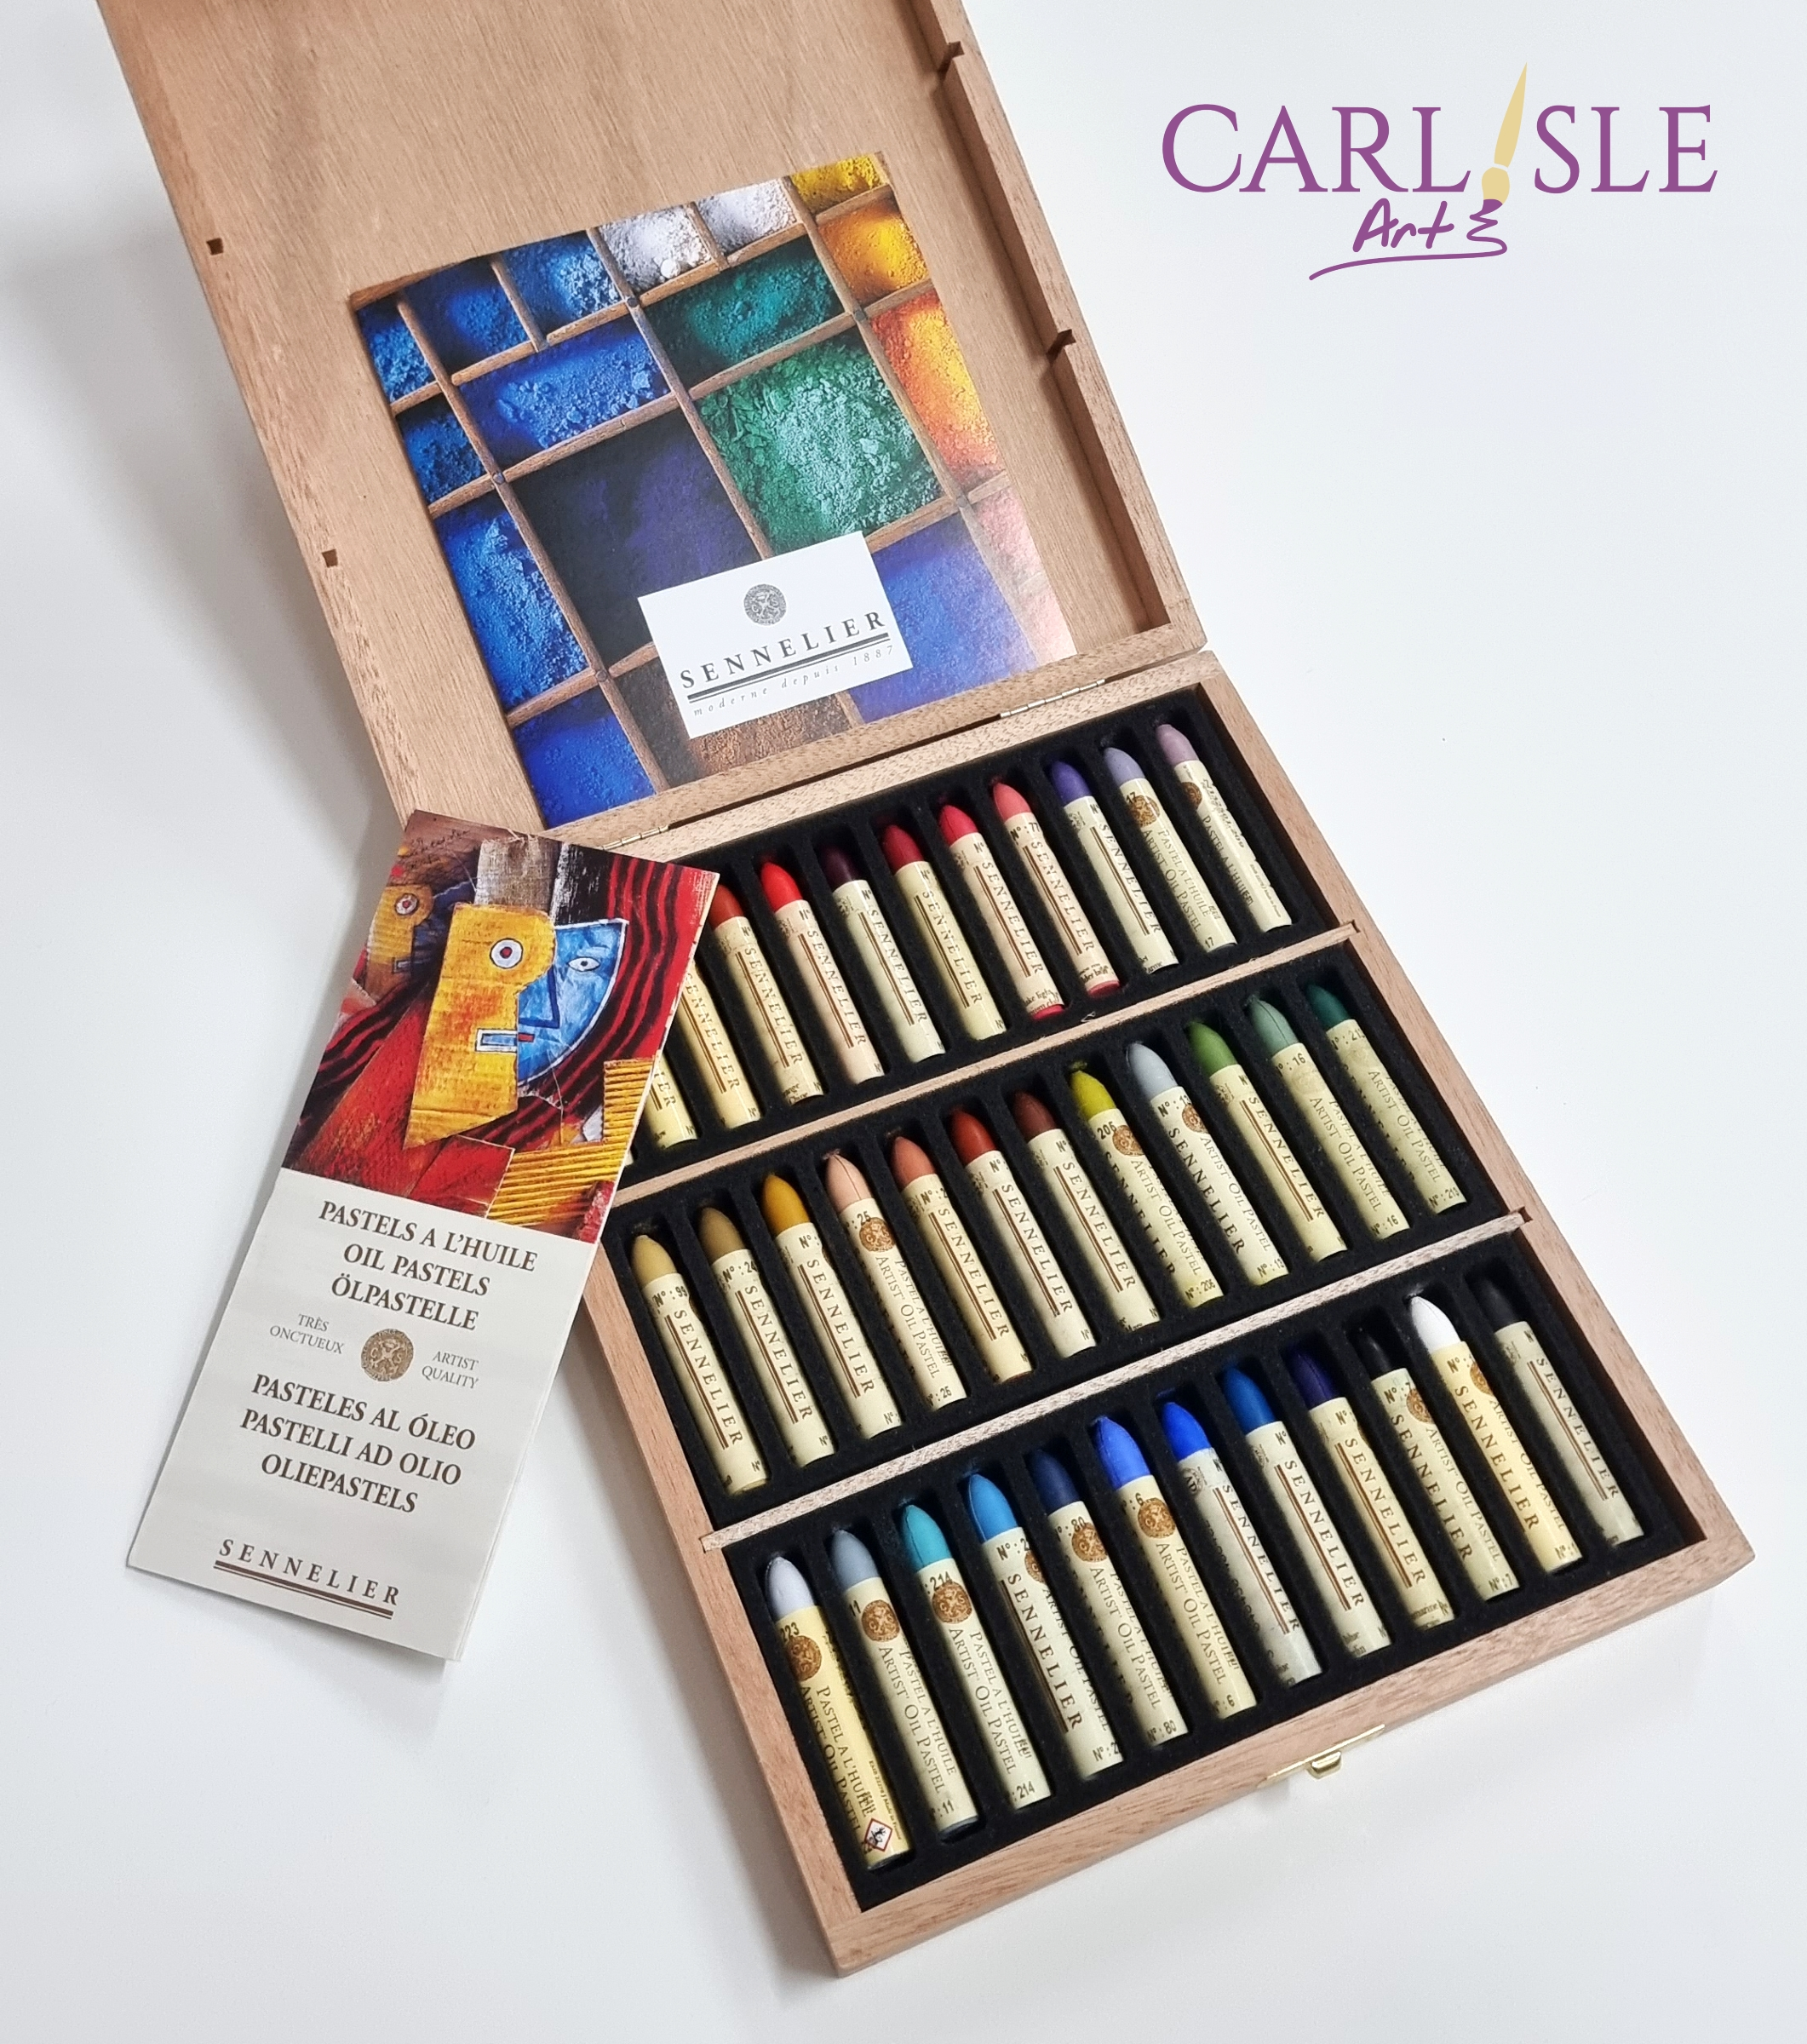 Sennelier Oil Pastel Set - Plein Air Set, Wood Box, Set of 36